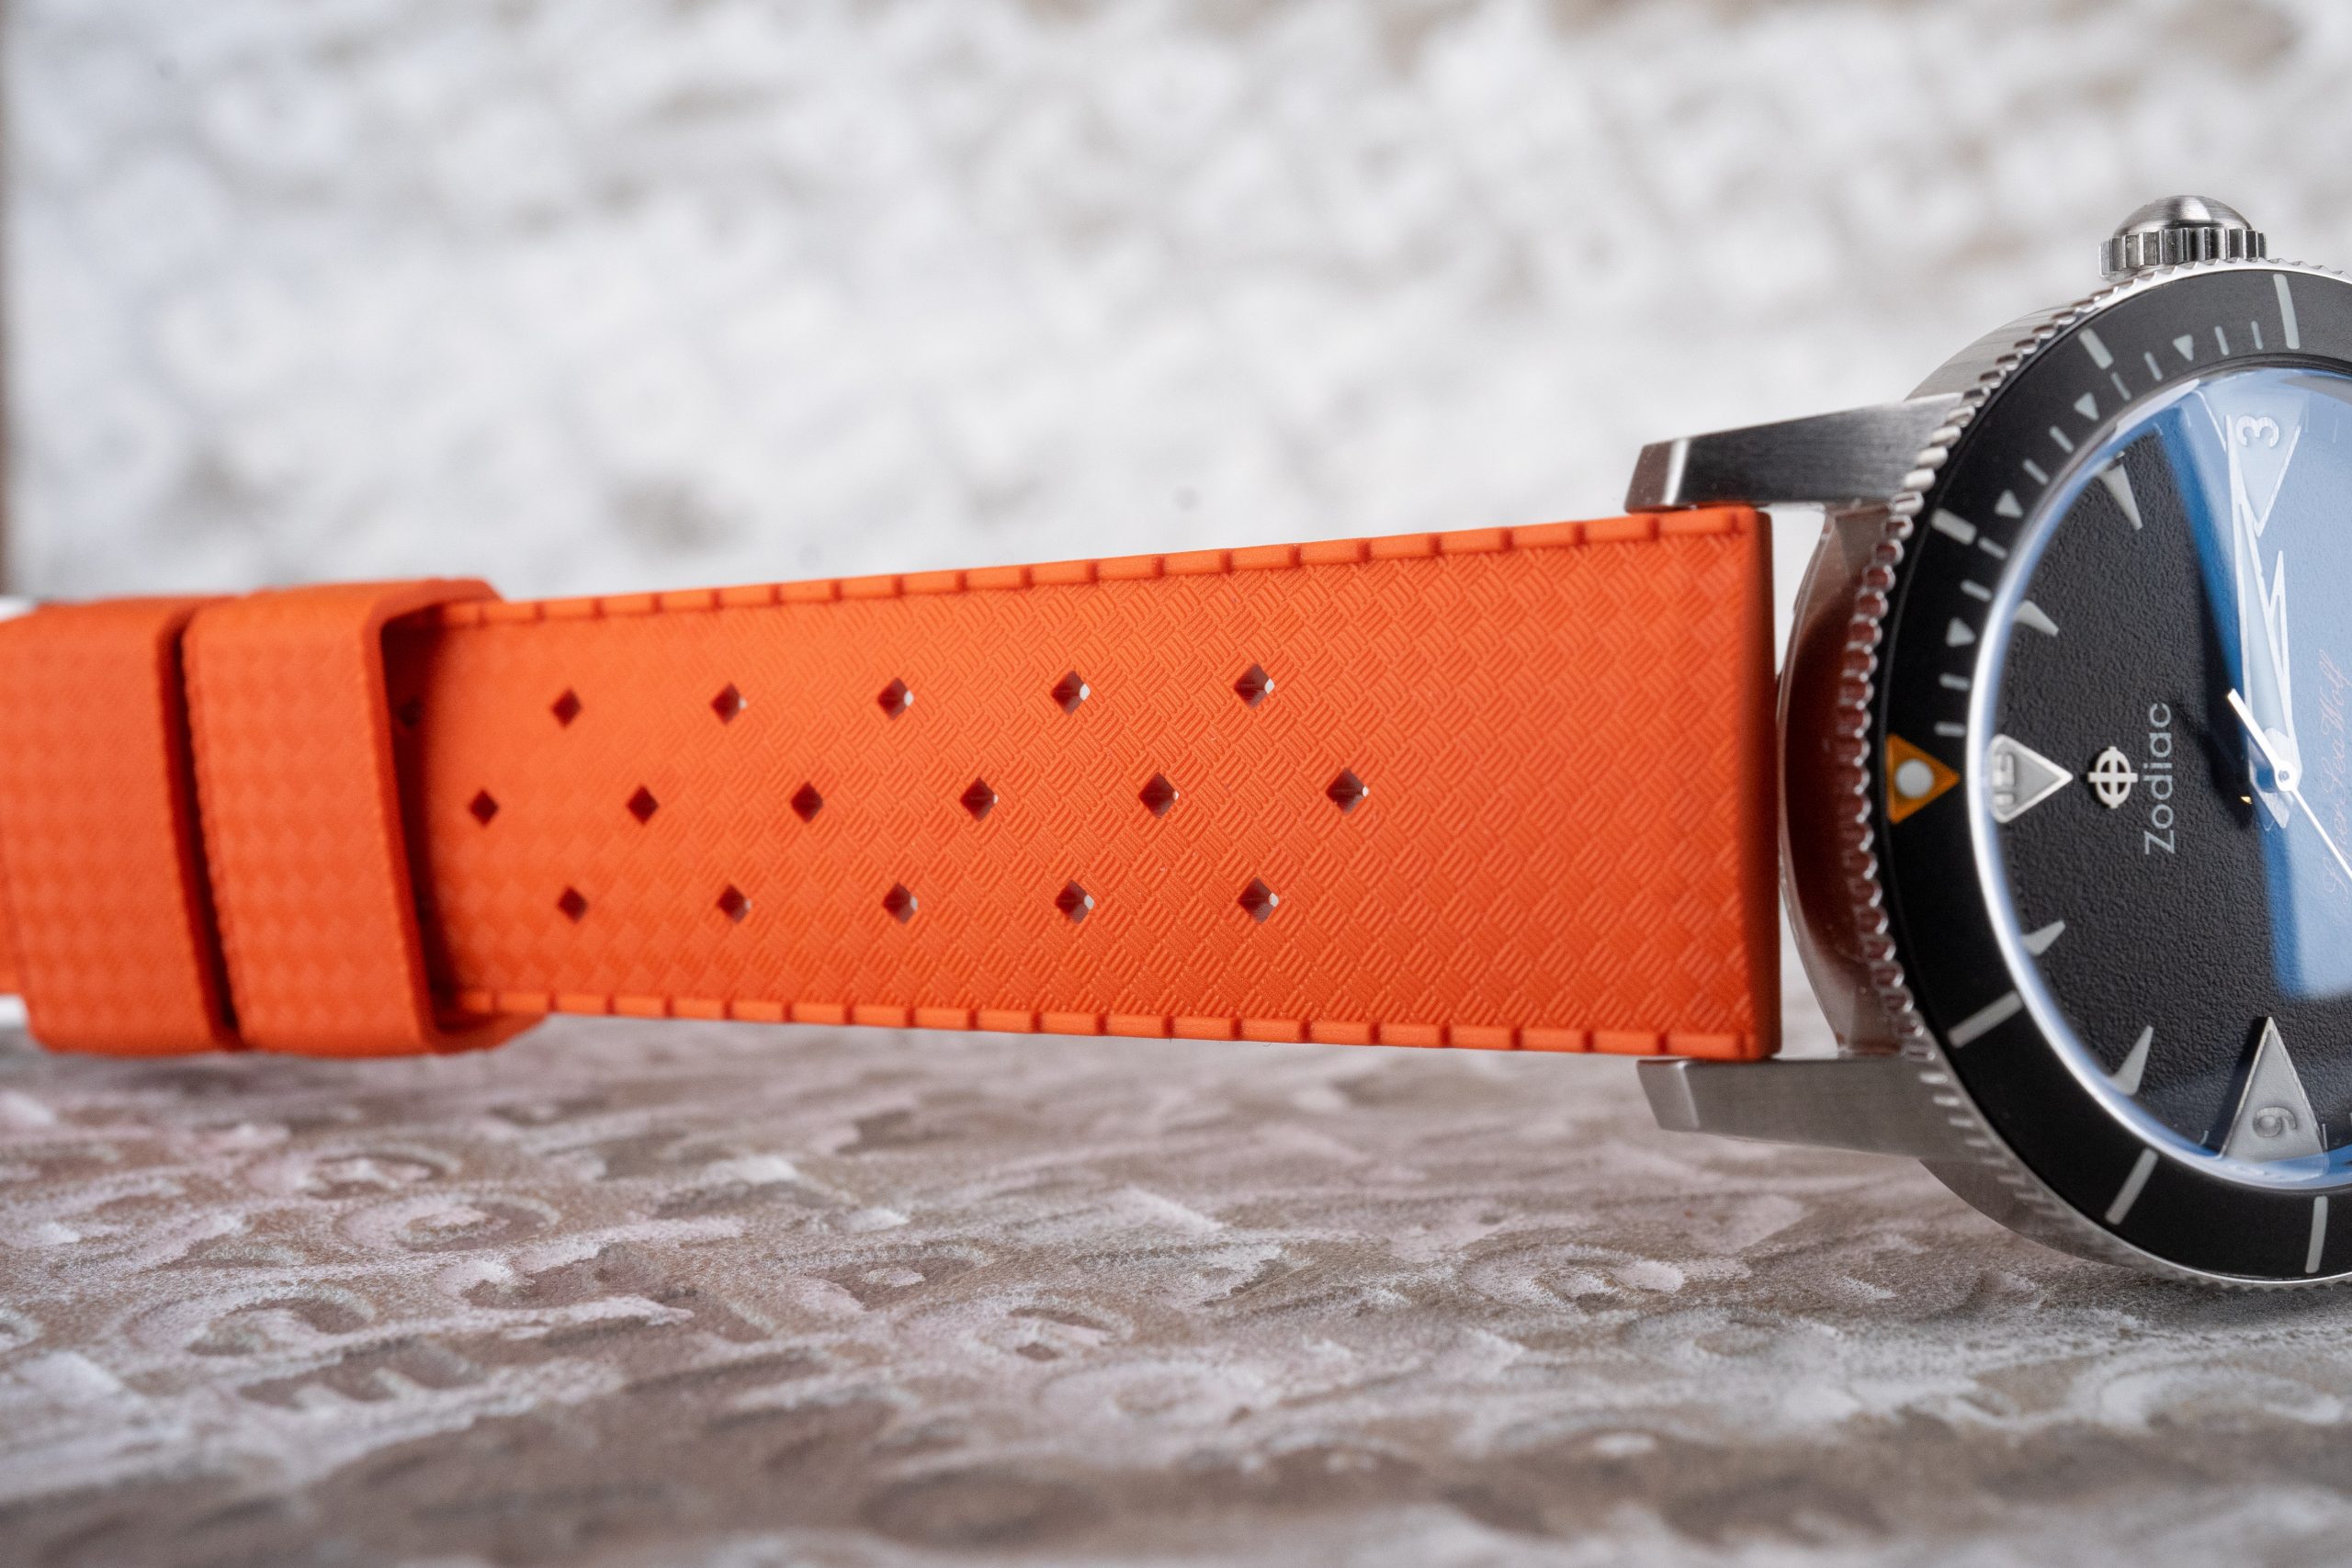 An orange Tropic Vulcanized Rubber Strap on a Zodiac dive watch.